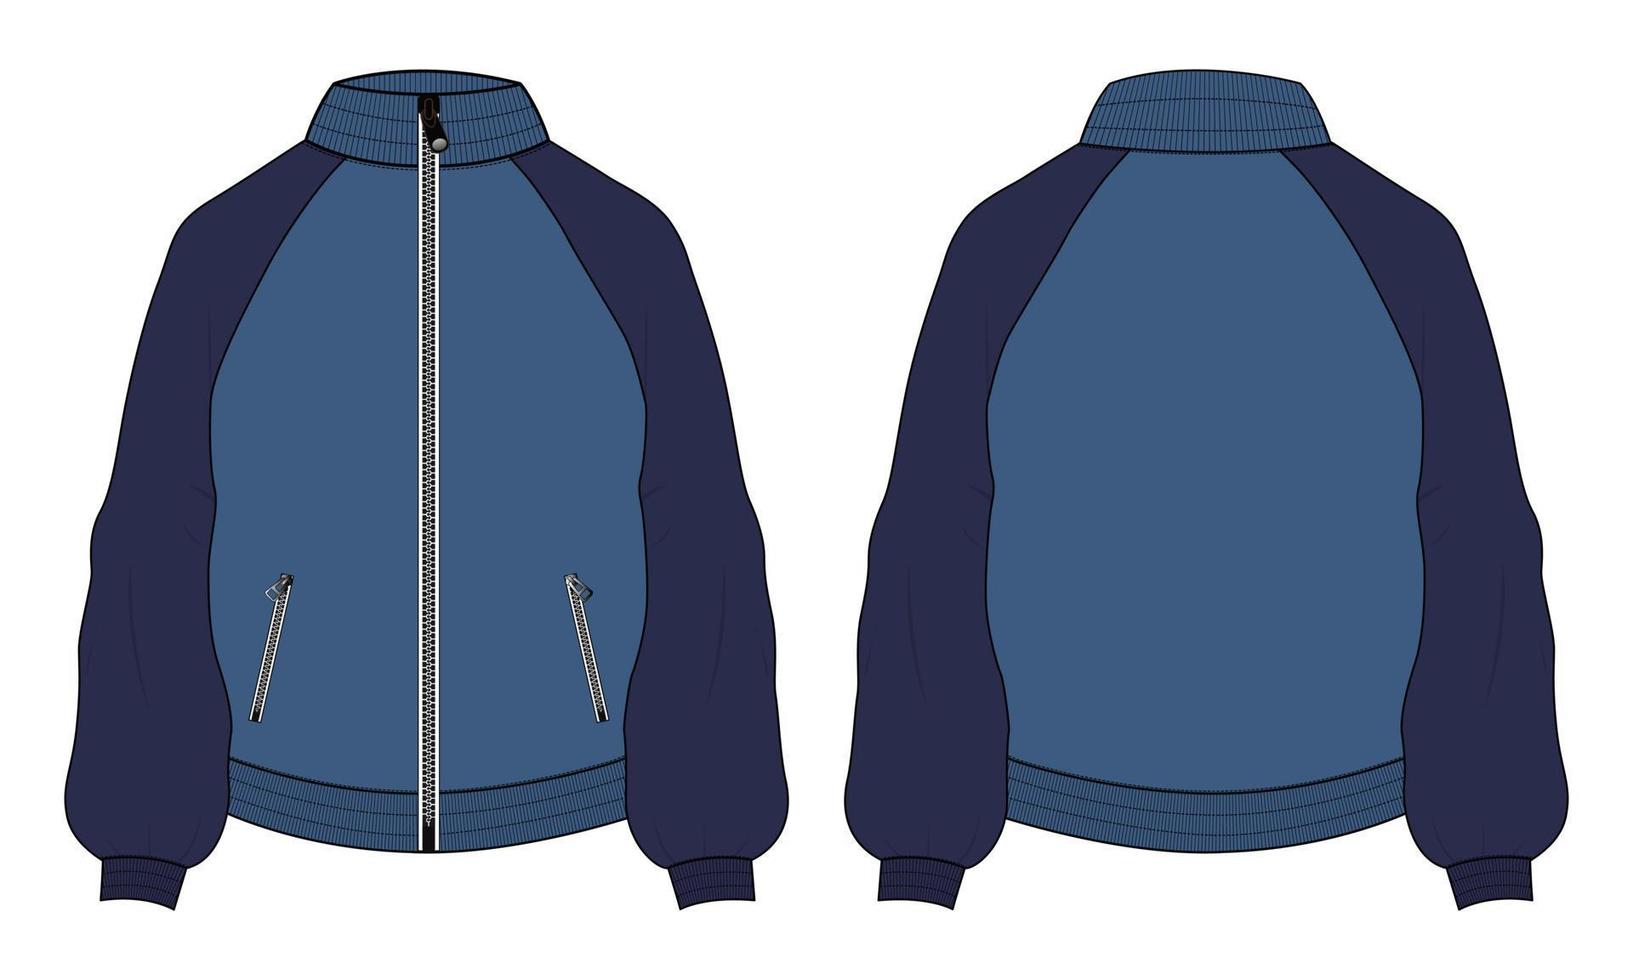 twee toon kleur lang mouw met rits en zak- jasje sweater technisch mode vlak schetsen vector illustratie sjabloon. kleding trui jasje vlak tekening vector bespotten omhoog cad.